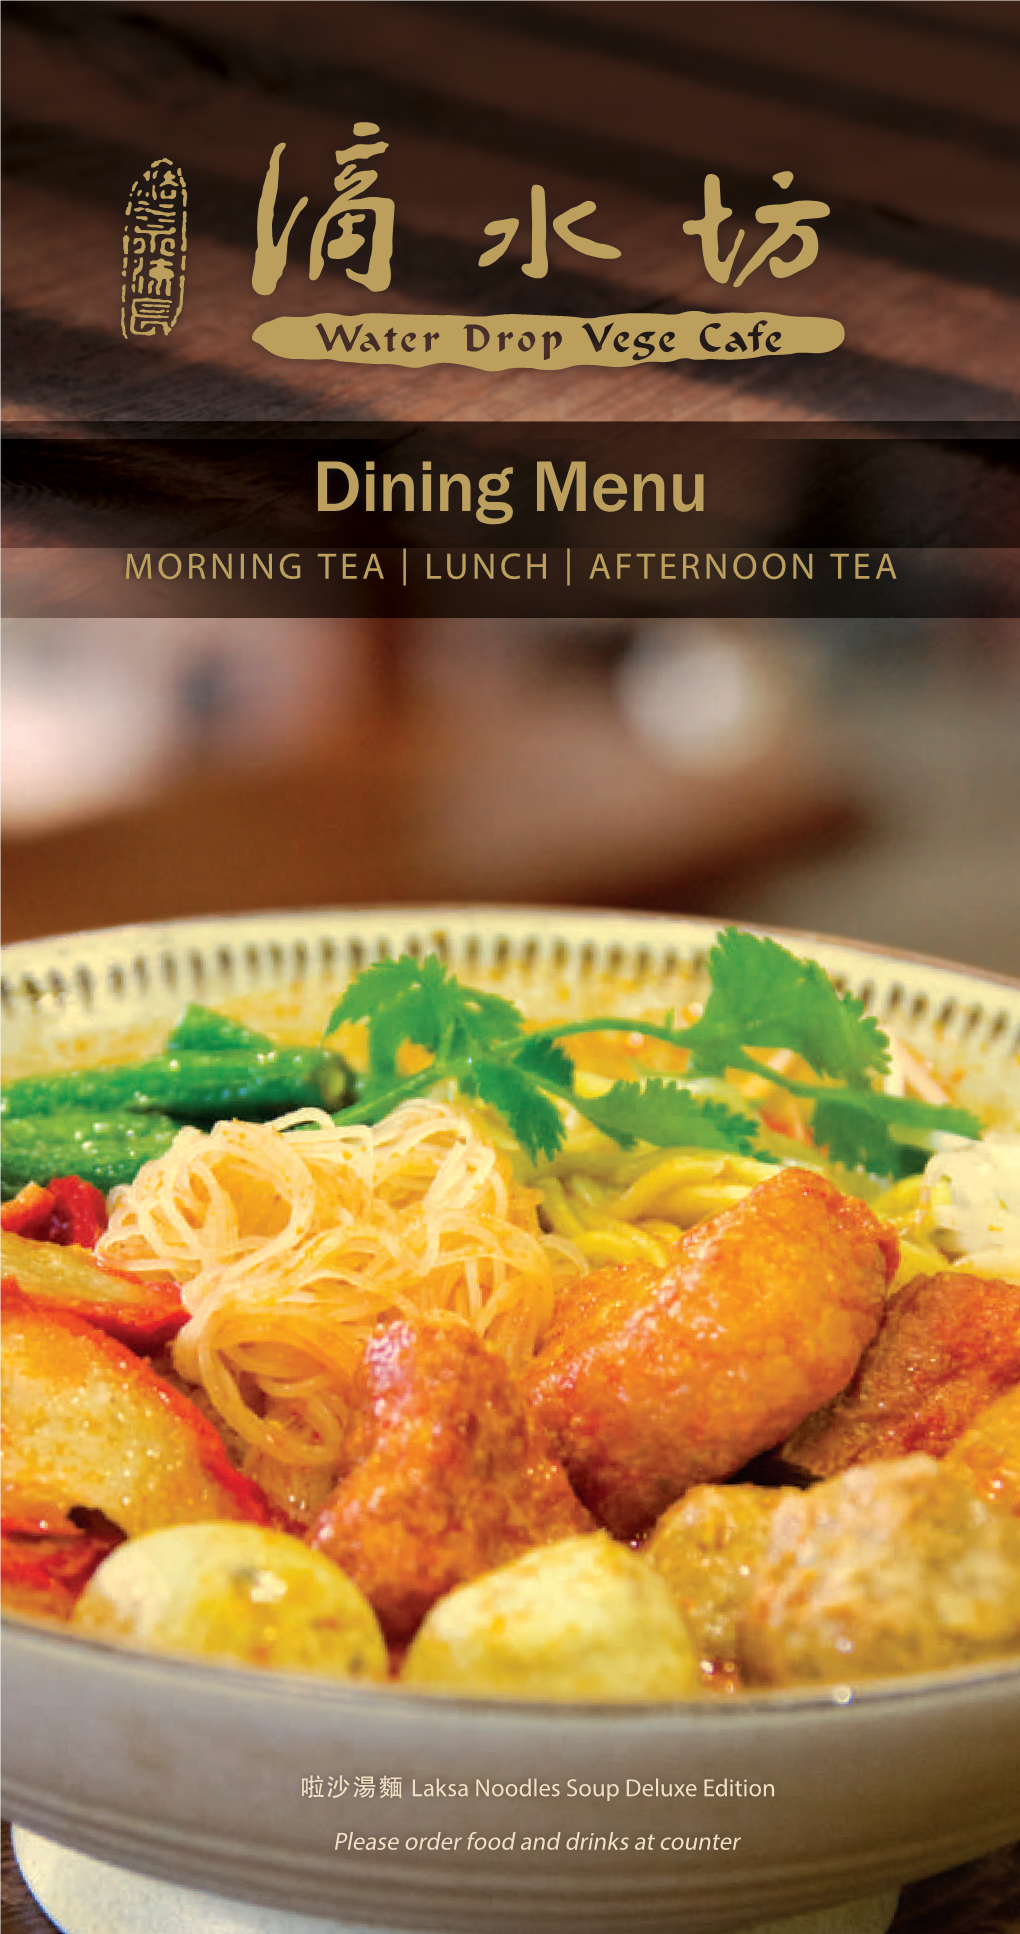 Dining Menu MORNING TEA | LUNCH | AFTERNOON TEA